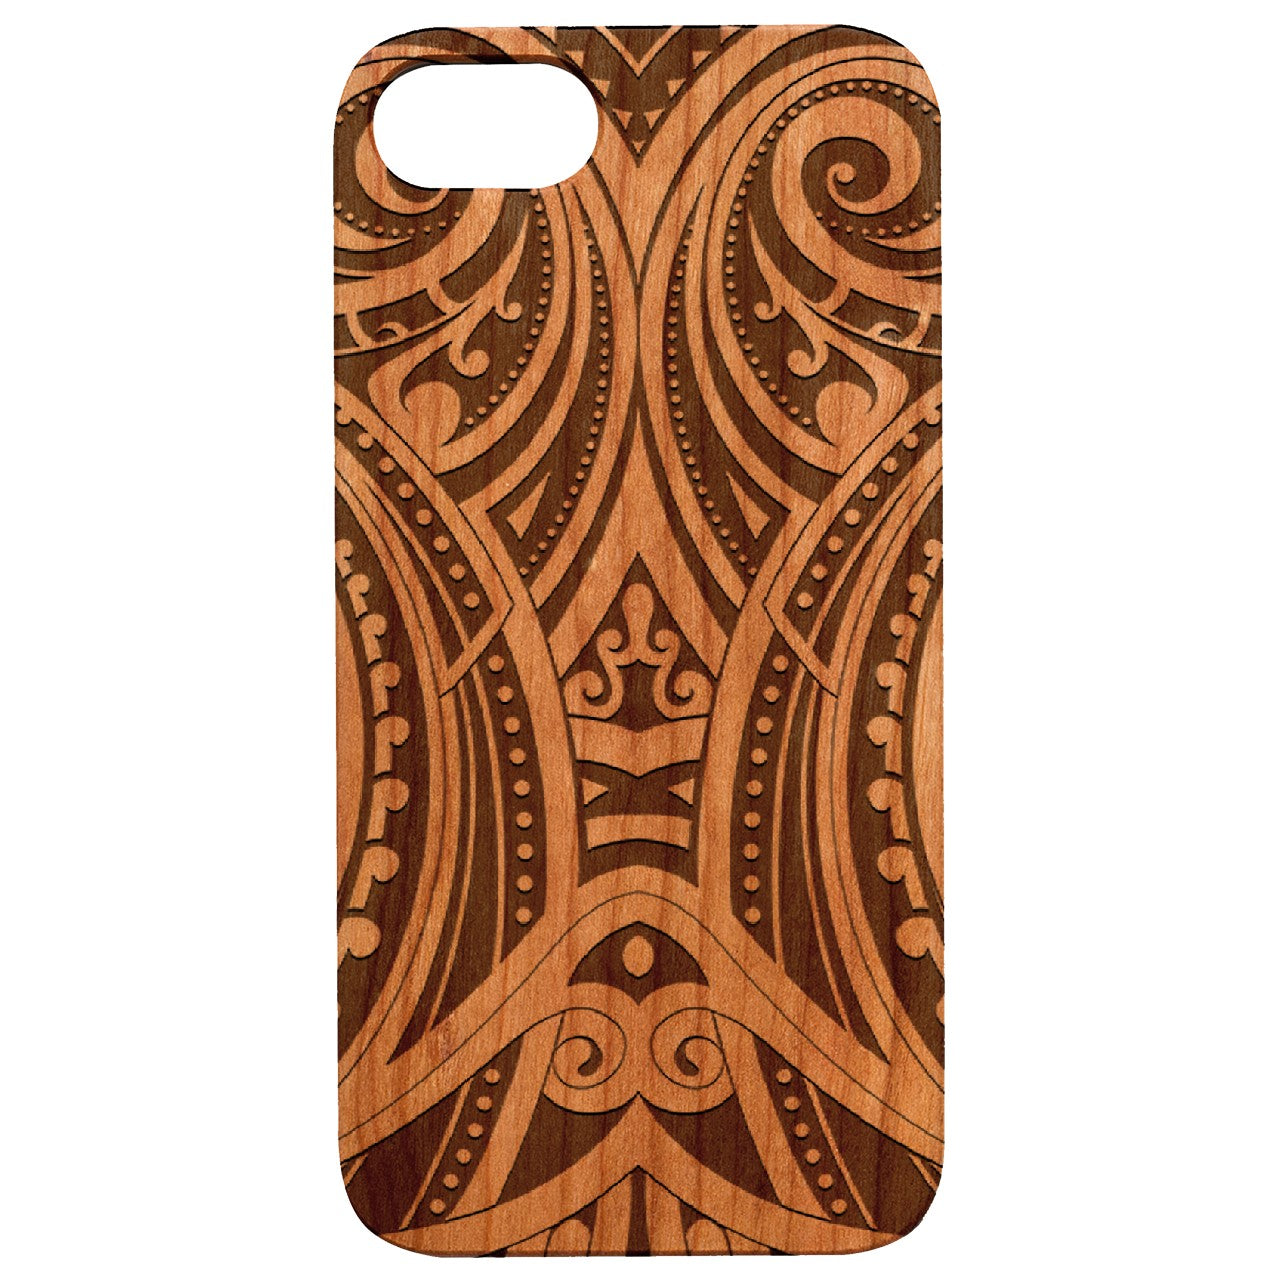  Maori 3 - Engraved - Wooden Phone Case - IPhone 13 Models